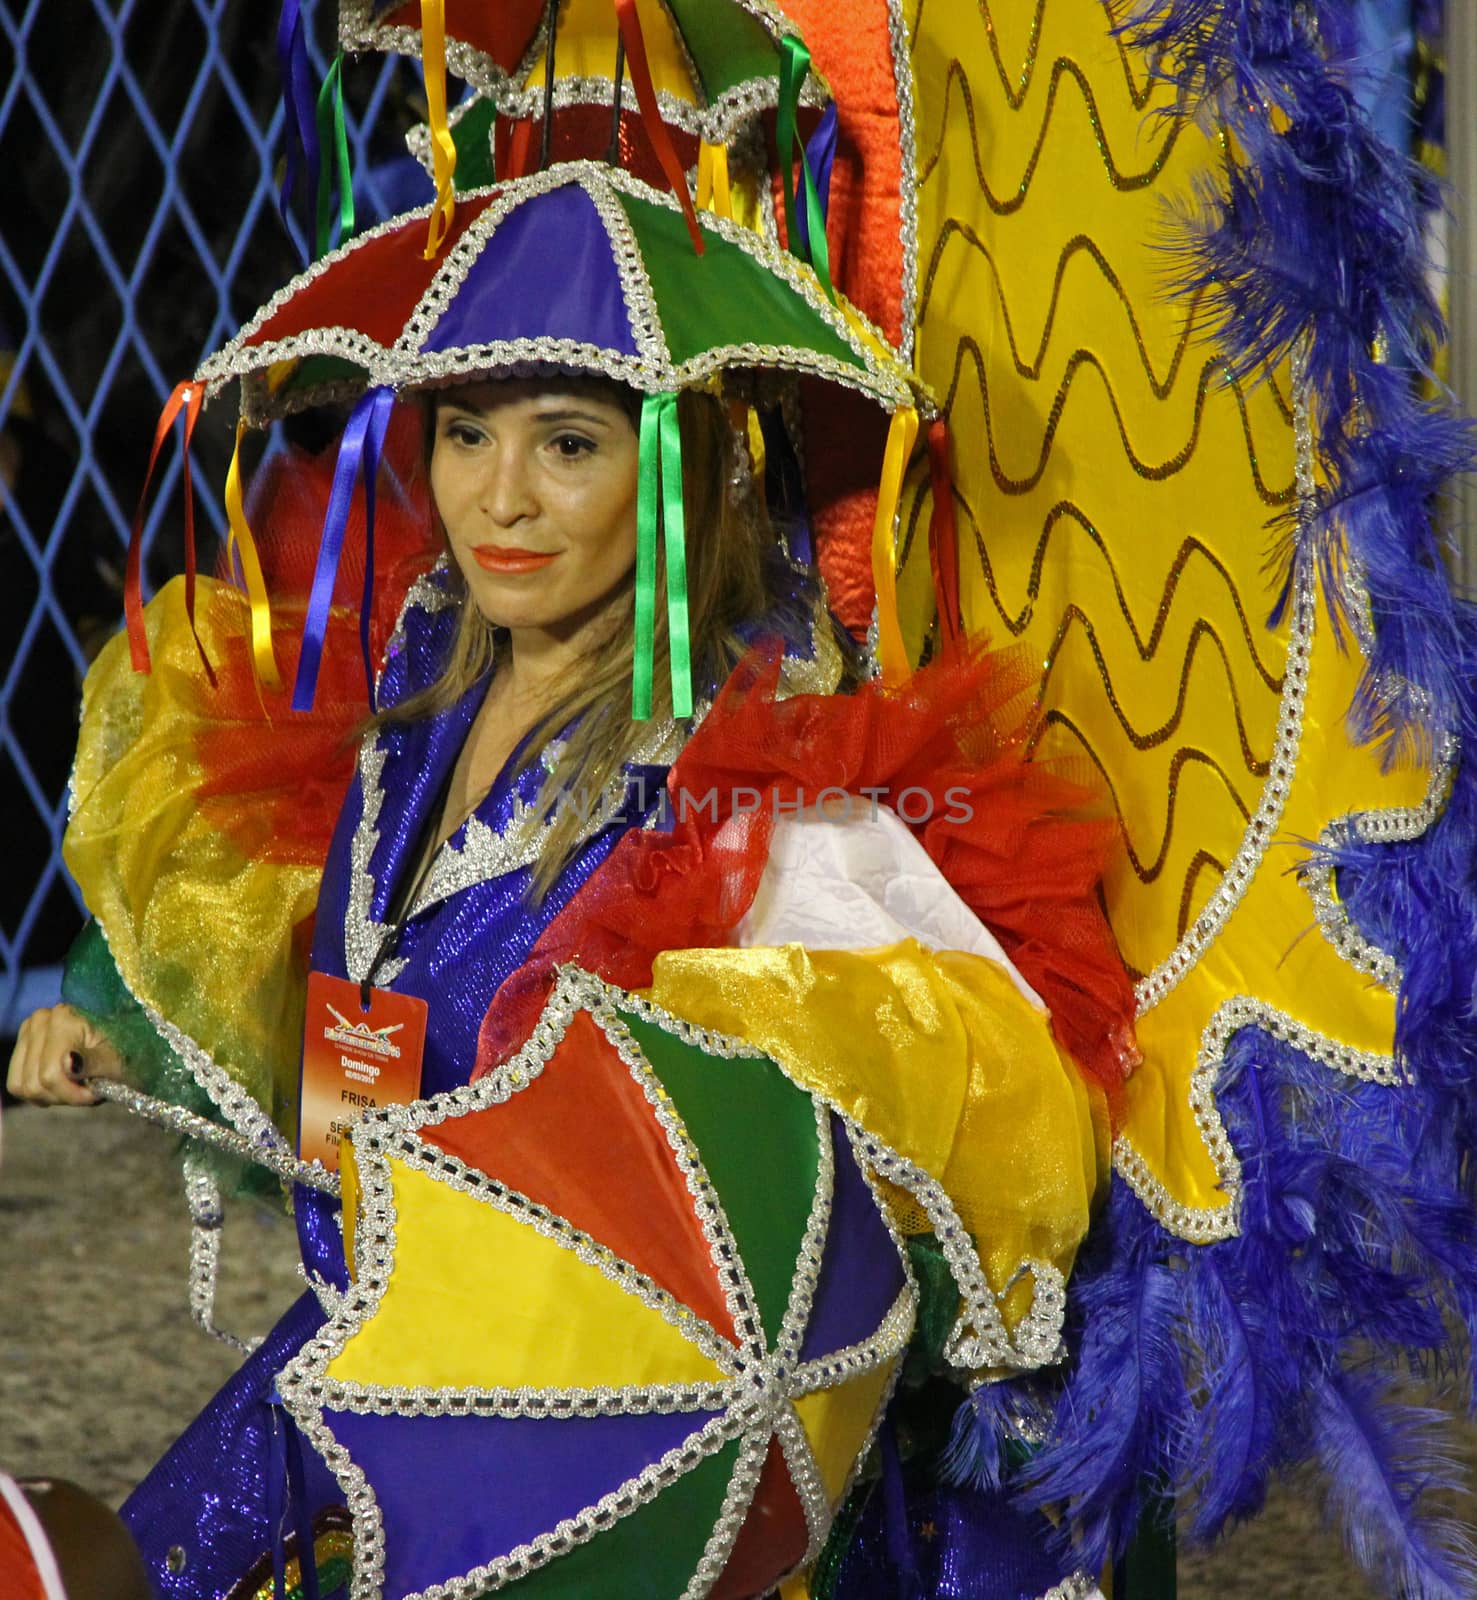 An entertainer at a carnaval in Rio de Janeiro, Brazil
02 Mar 2014
No model release
Editorial only